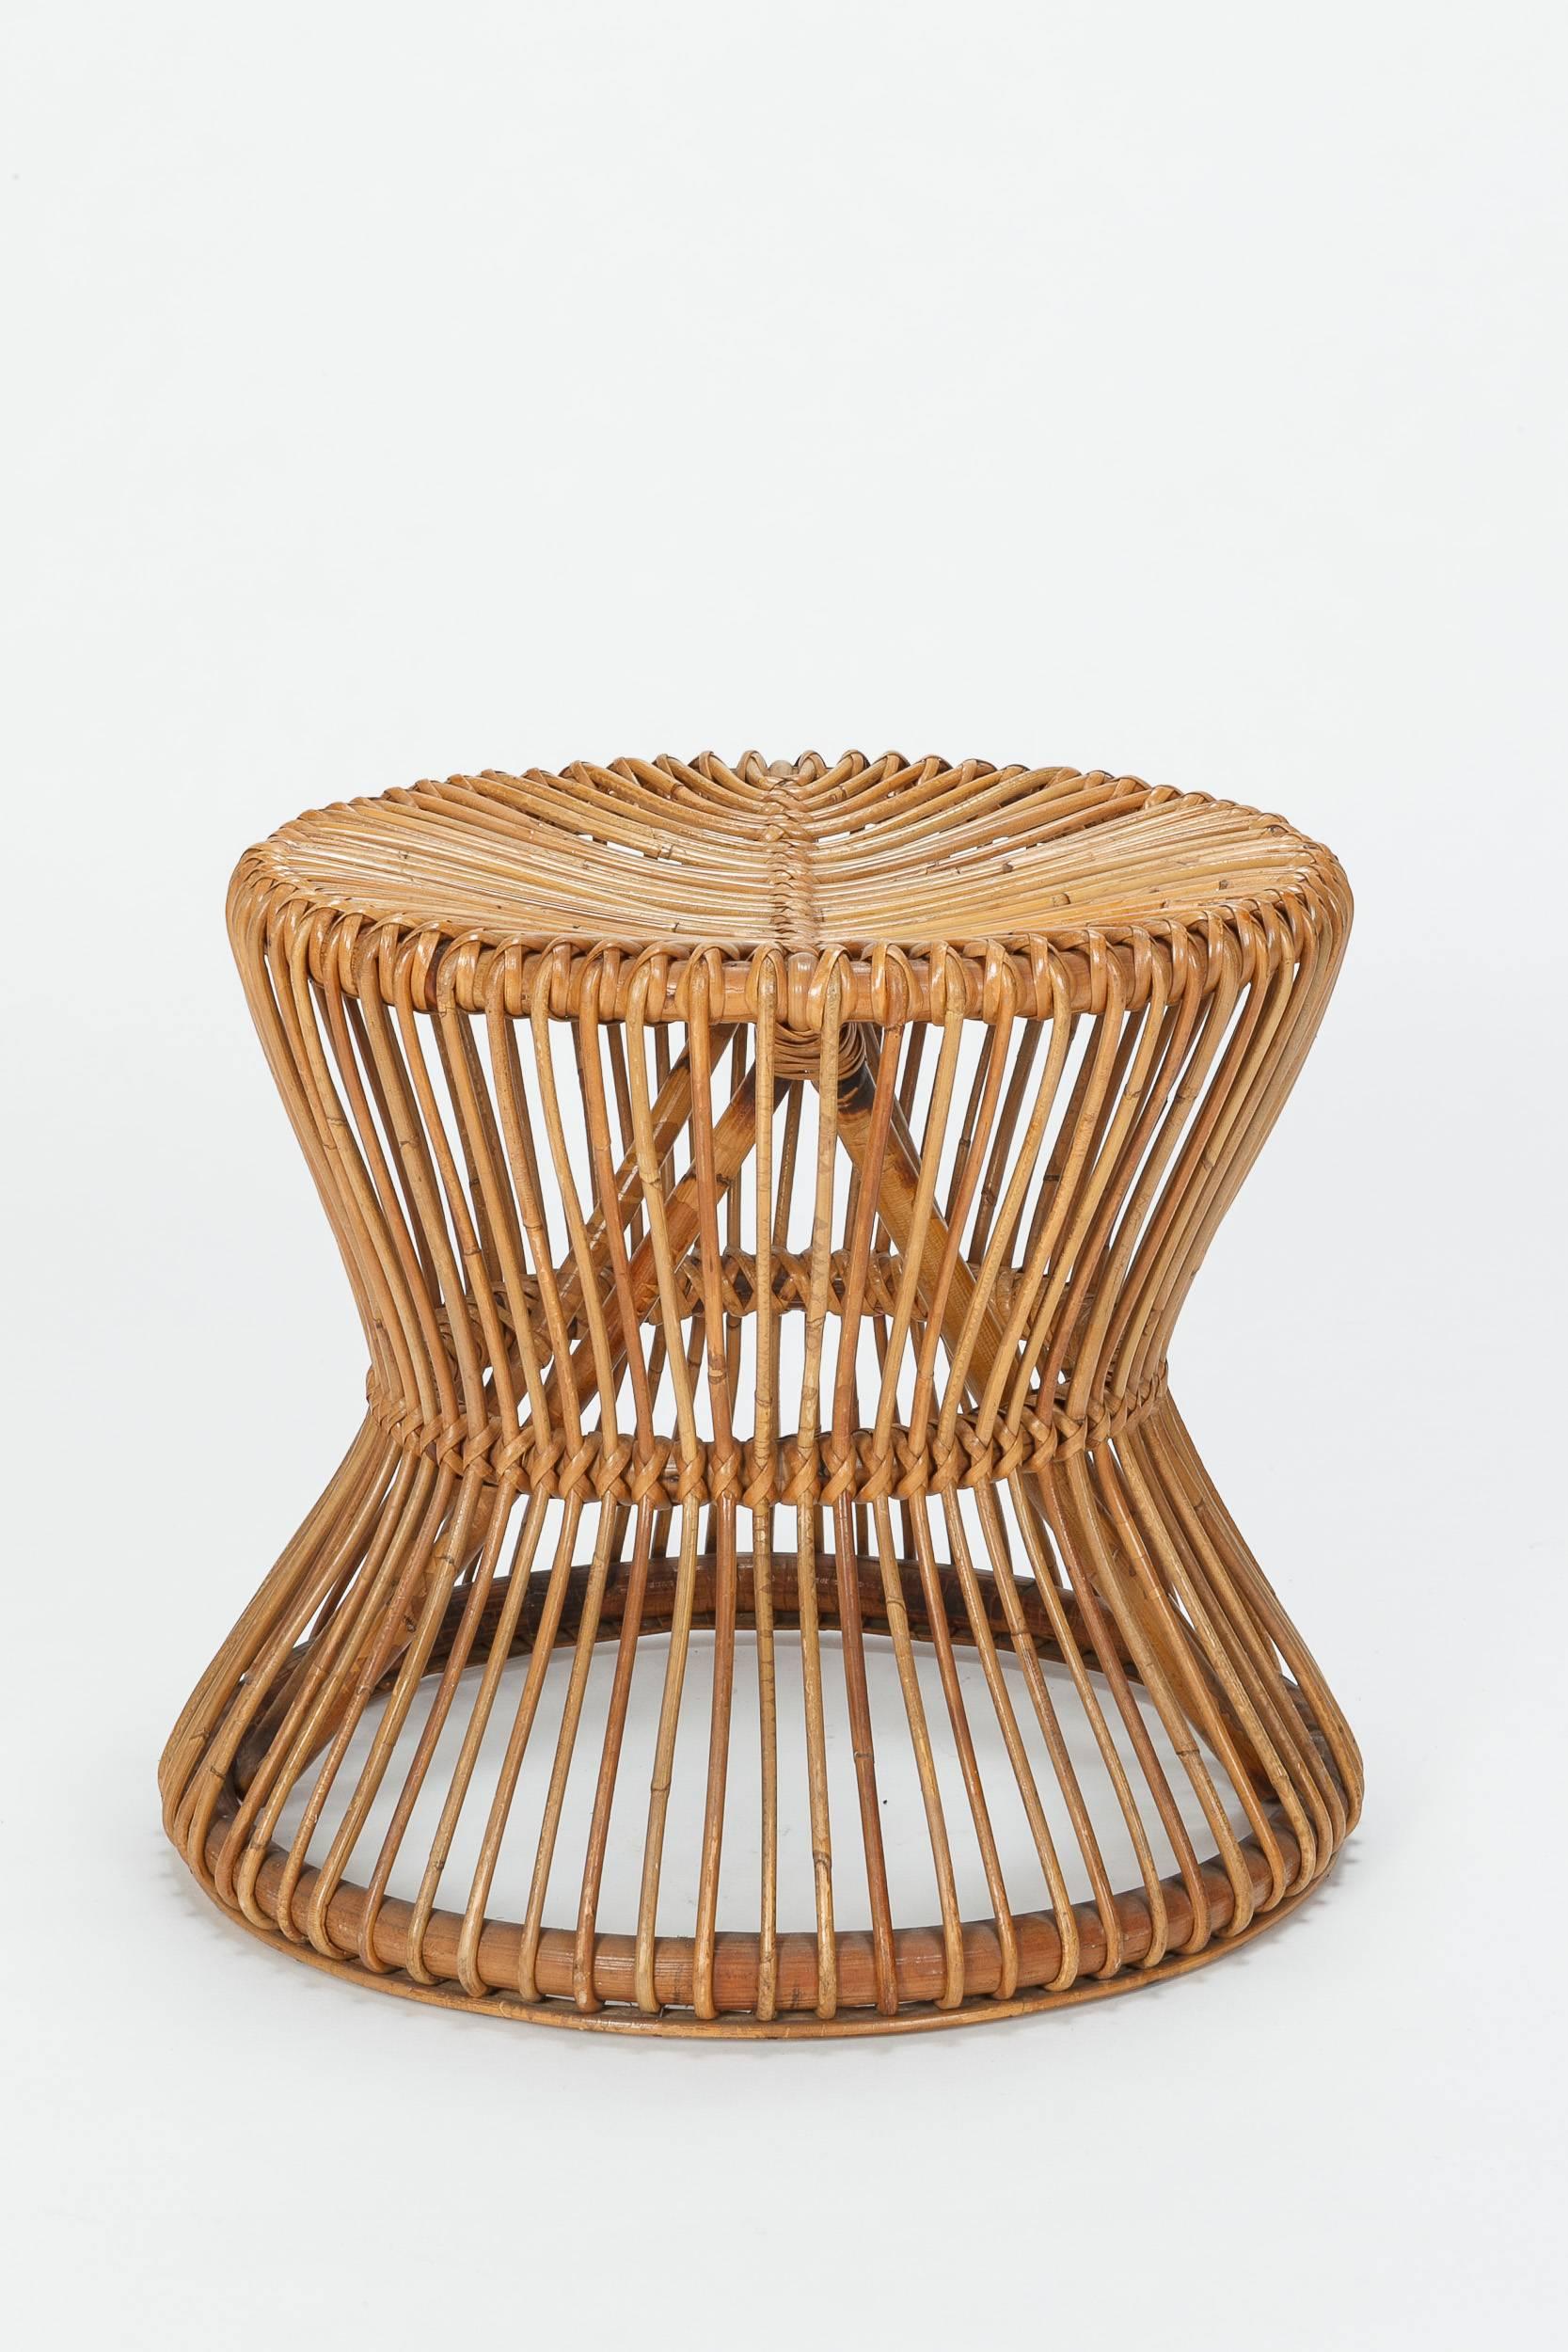 Wicker Franco Albini Margherita Italian Chair and Side Table, 1950s 1